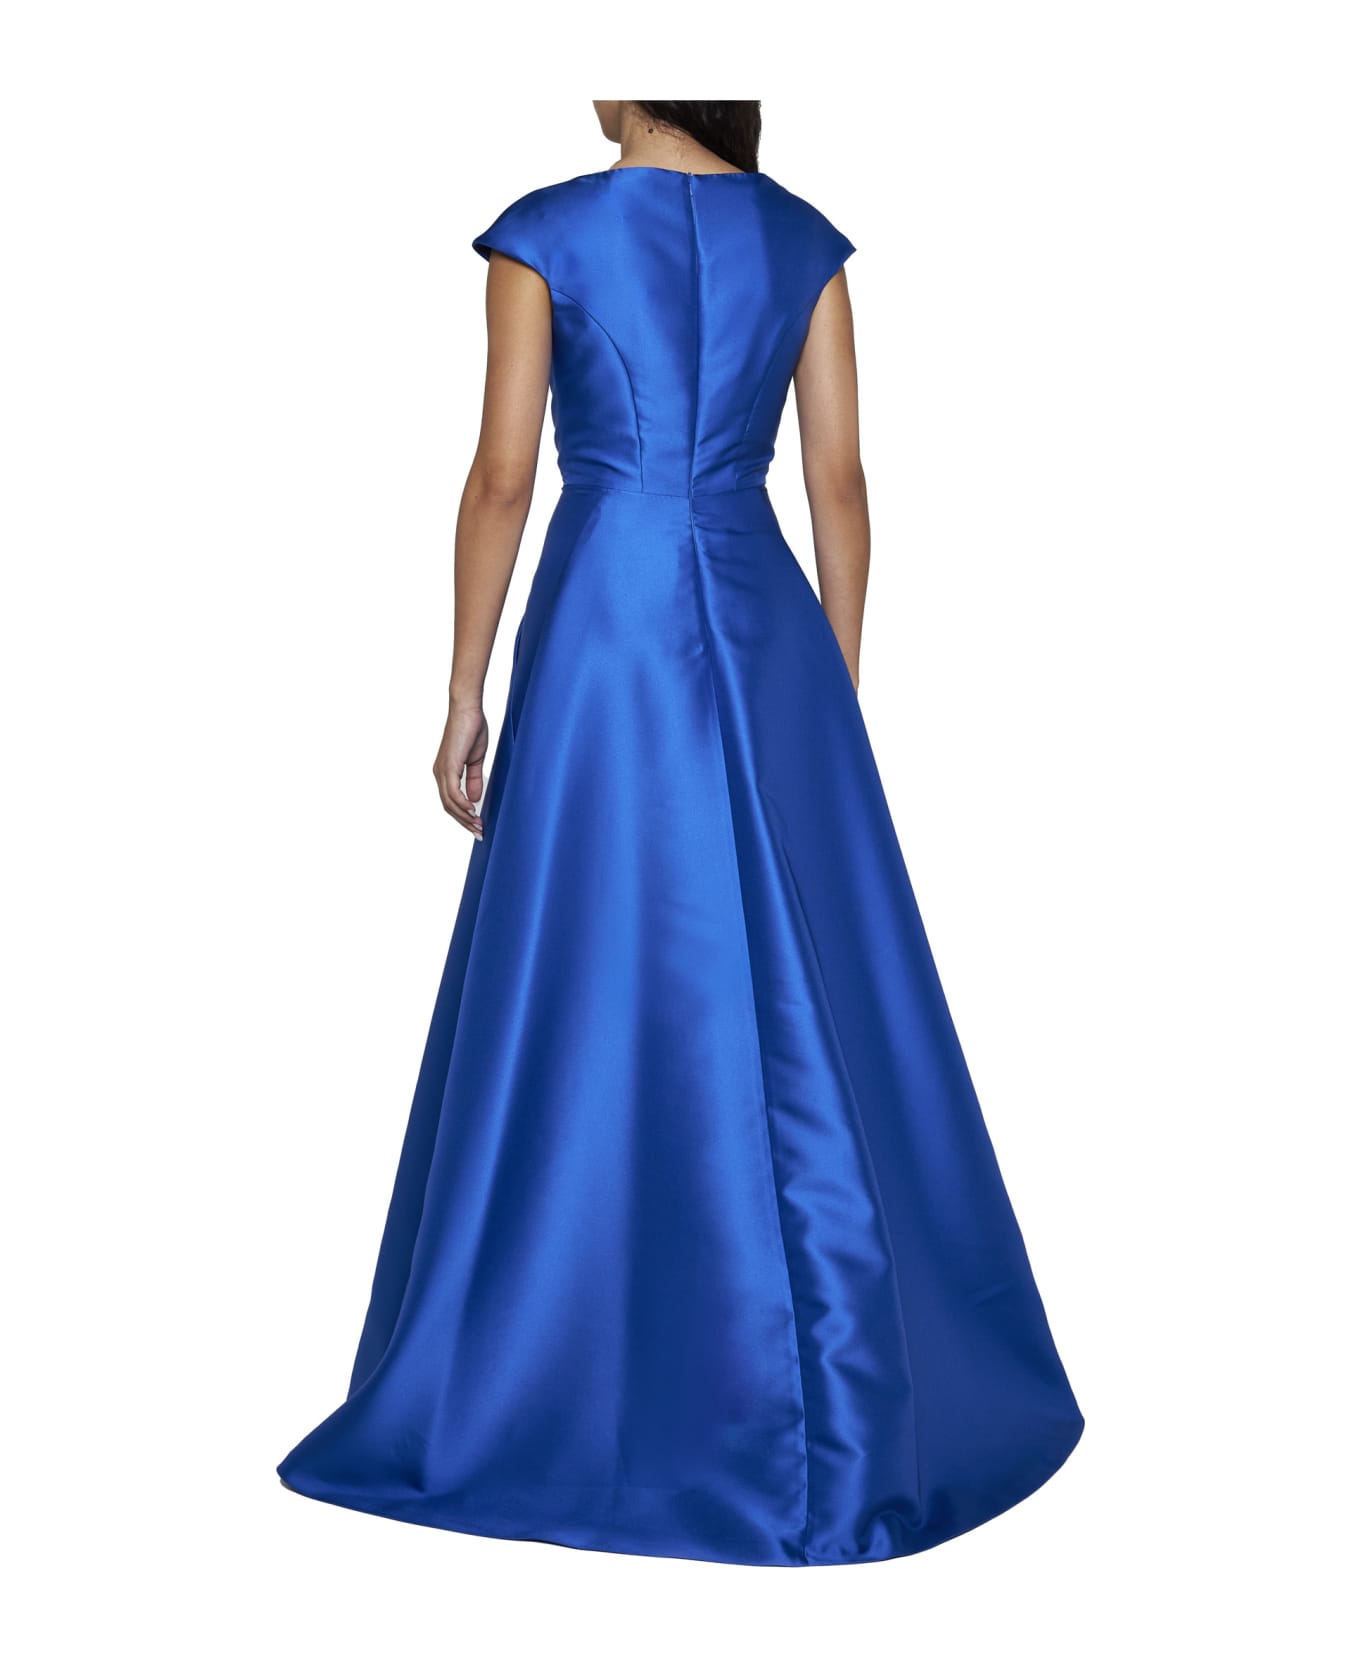 Blanca Vita Dress - Blue